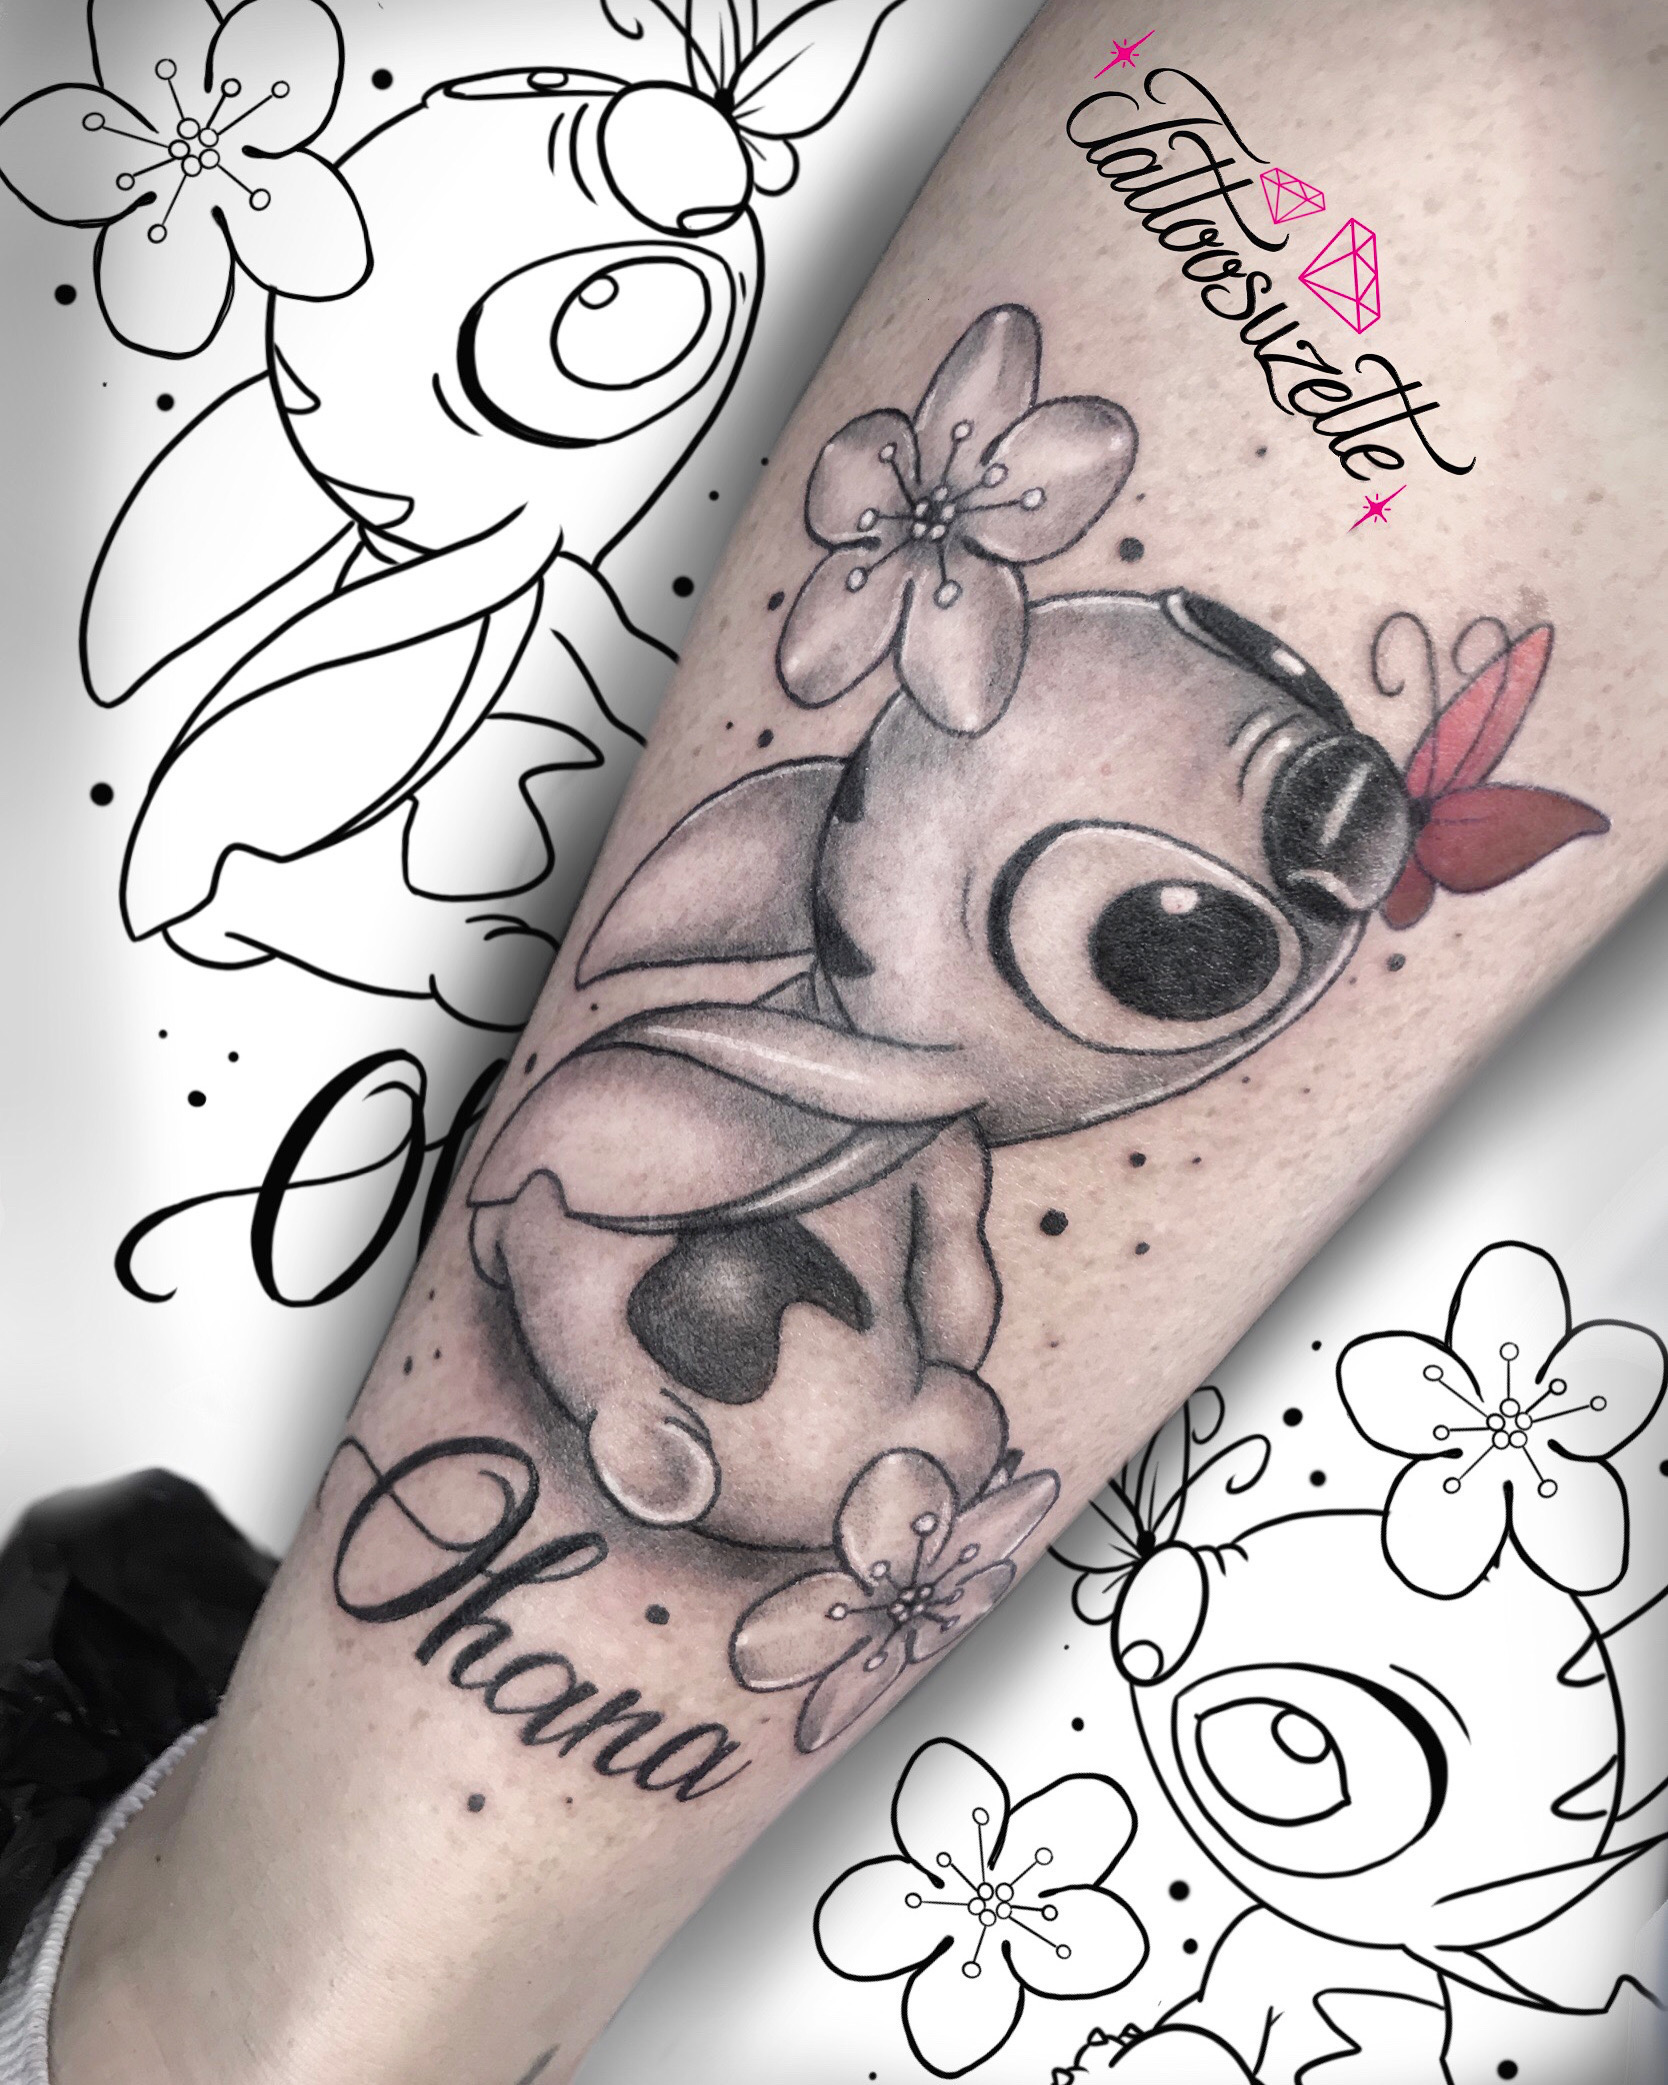 Tatouage stitch aquarelle by tattoosuzette on DeviantArt